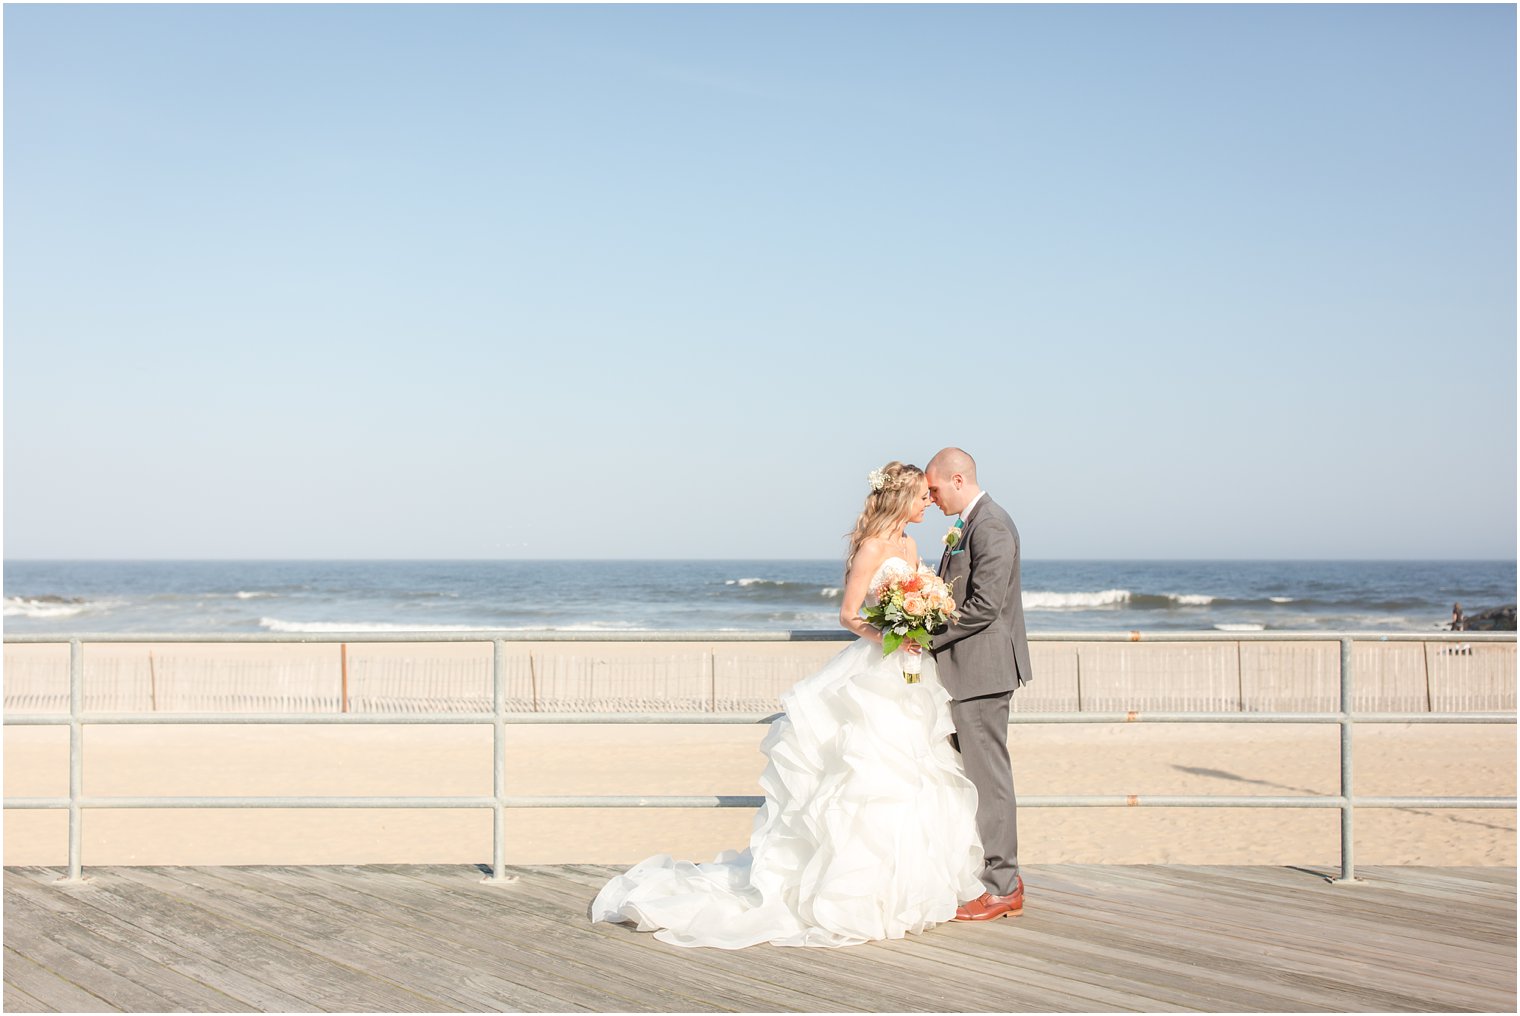 Wedding photo with beach in Asbury Park